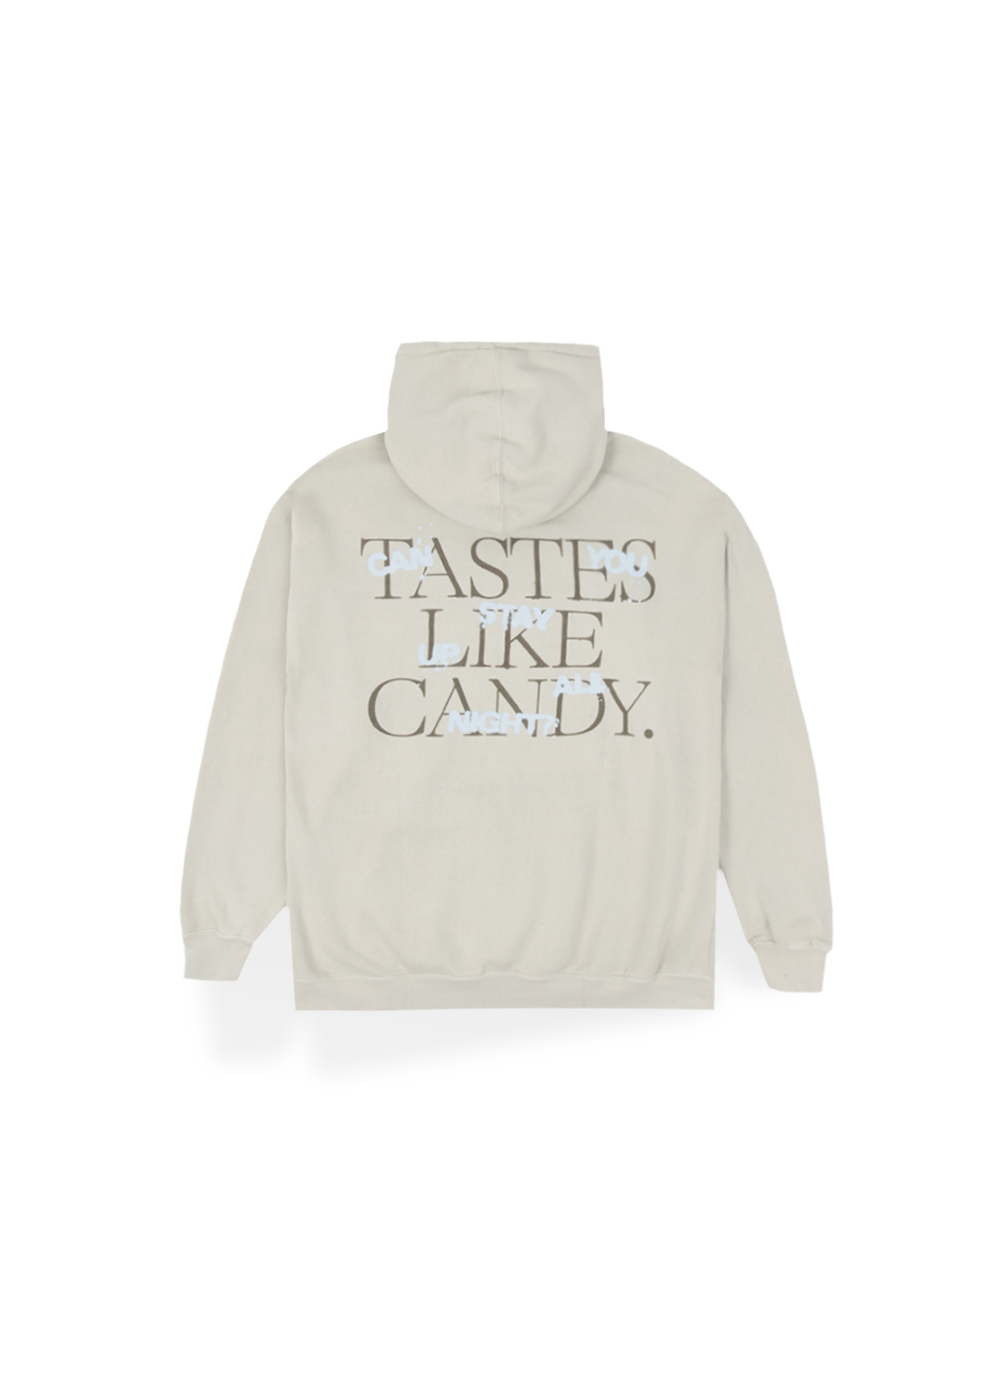 tastes like candy hoodie back